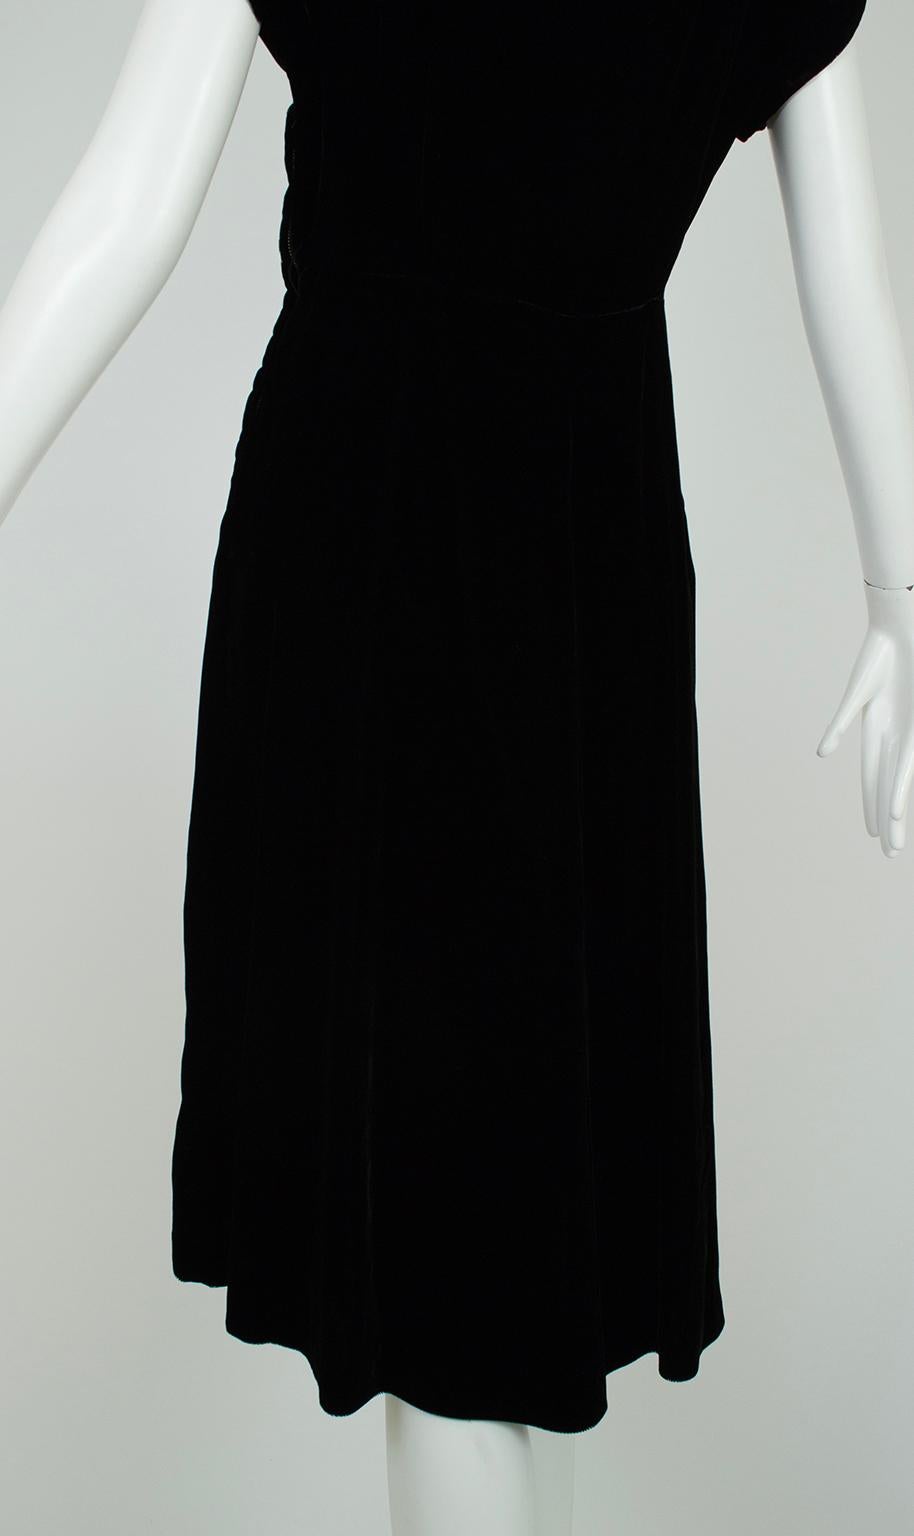 Pre-War Black Velvet Art Deco Bead and Rhinestone Cocktail Dress – L, 1940s For Sale 6